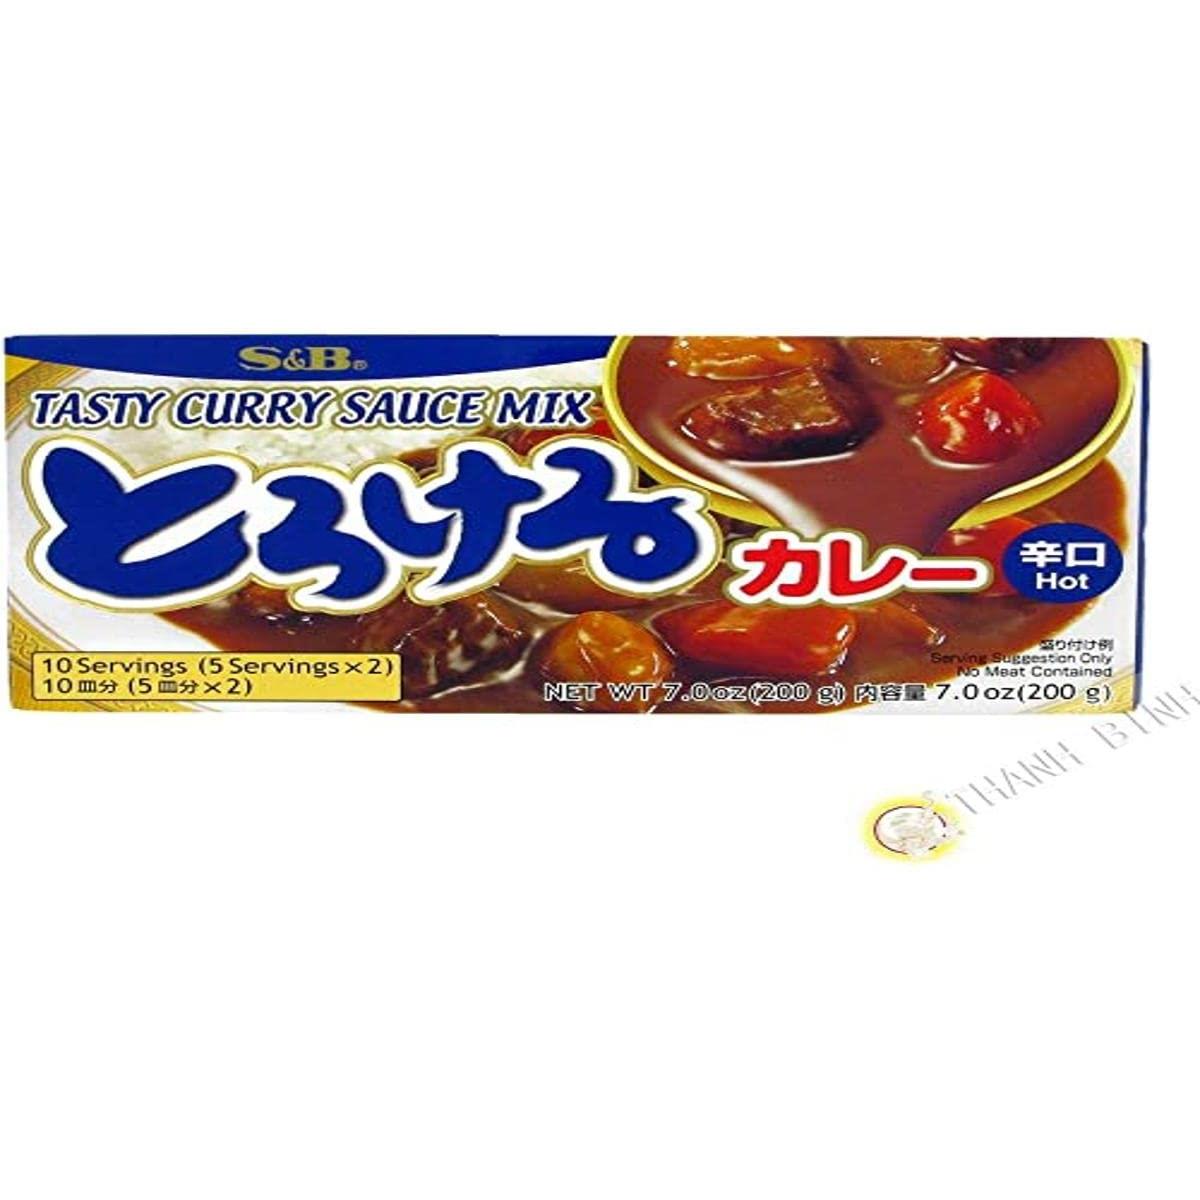 S&B Tasty Curry Sauce Mix, Hot, 7.0 oz